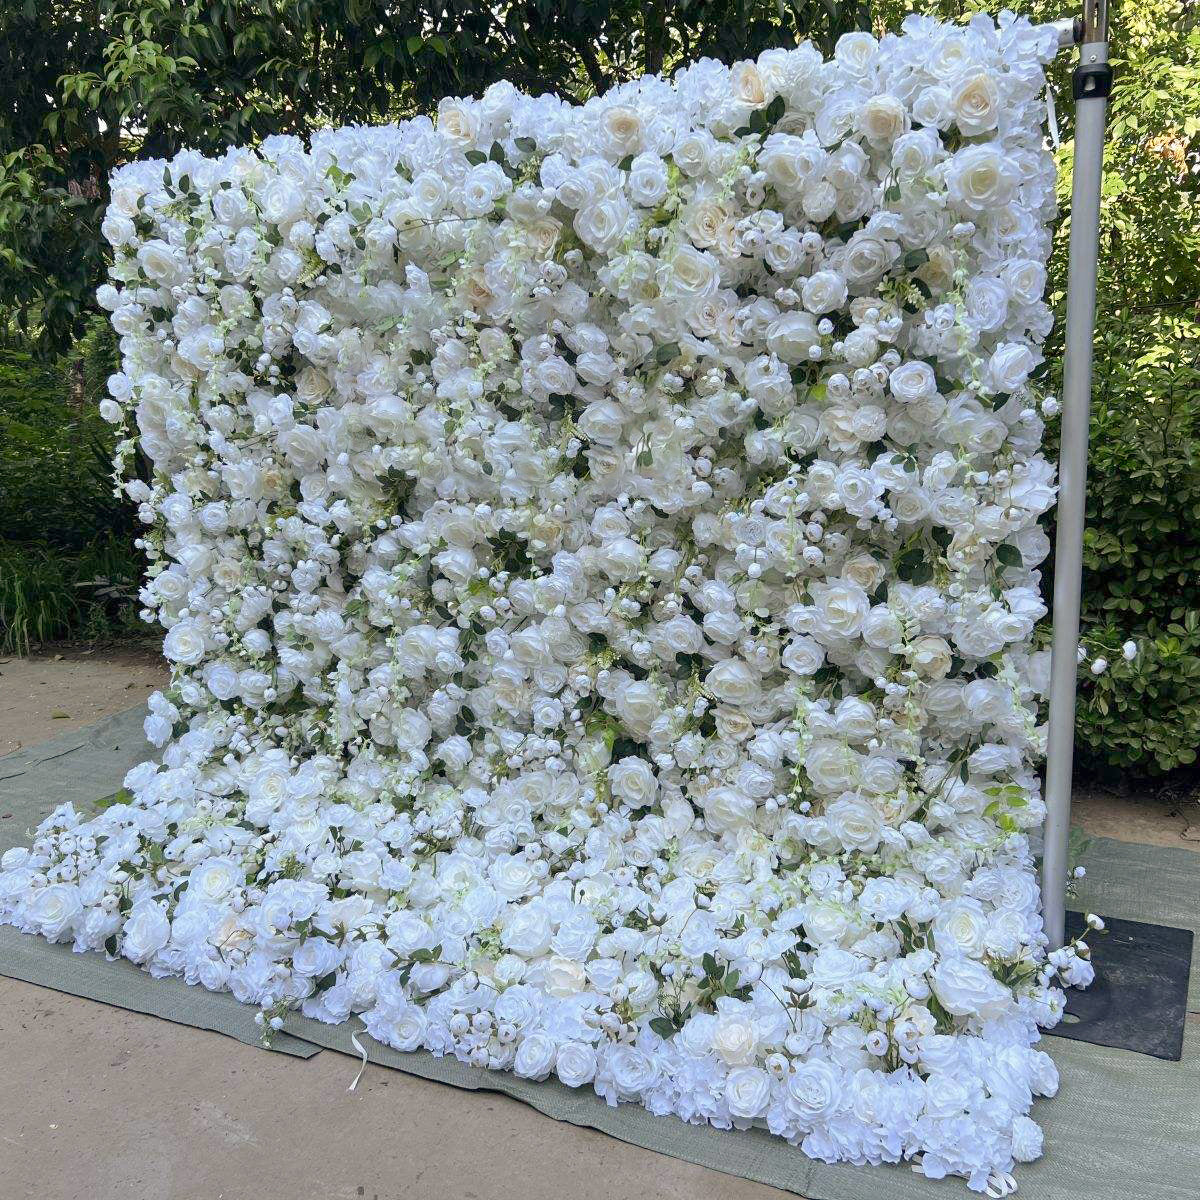 3D Artificial Flower Wall Arrangement Wedding Party Birthday Backdrop Decor HQ3764